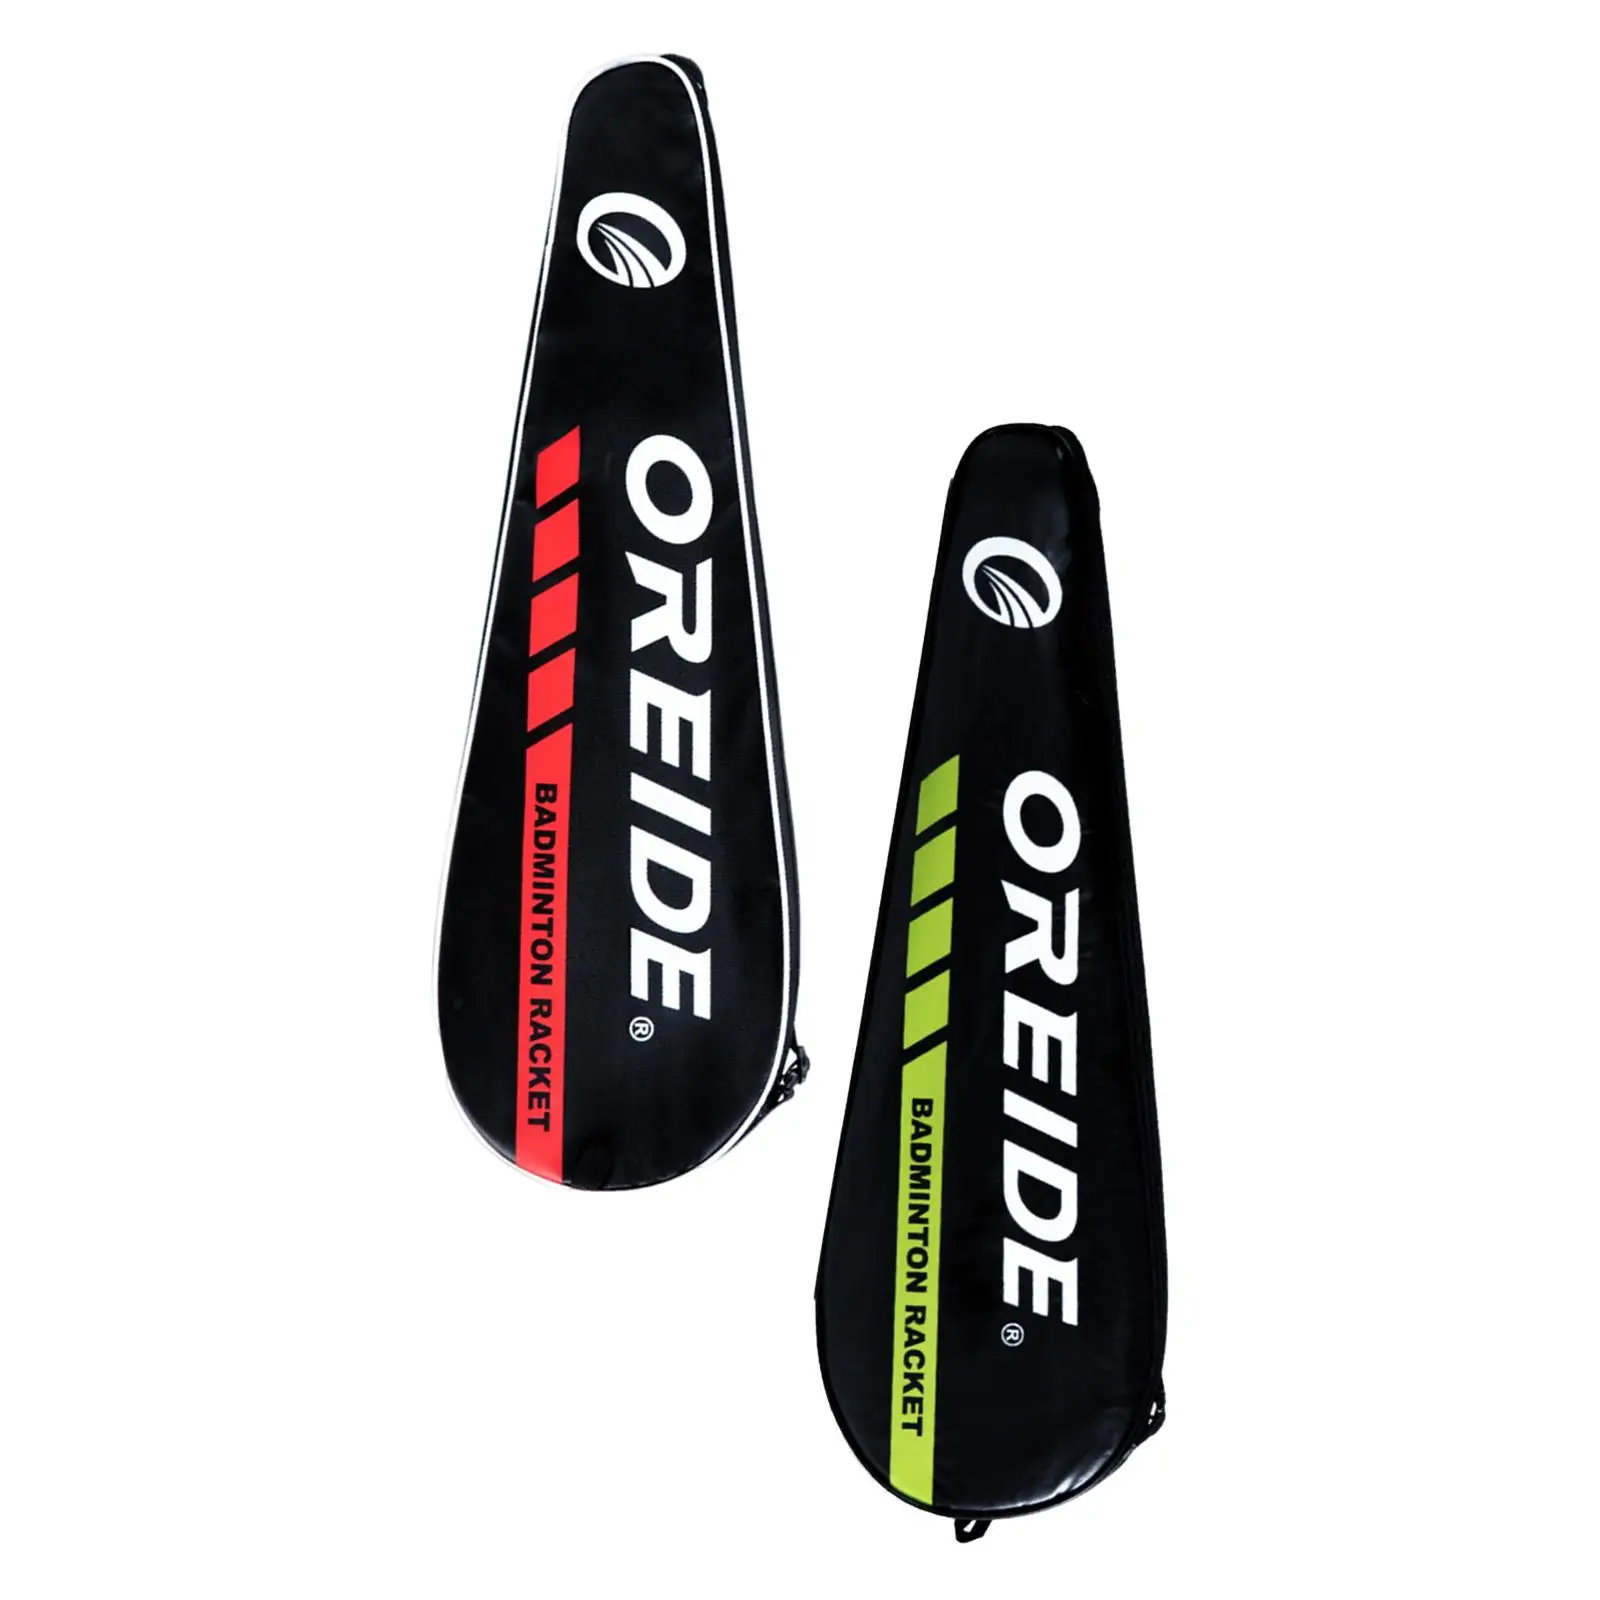 Badminton Racket Cover Carrying Bag Dustproof Storage Carrier Protect with Adjustable Shoulder Strap for Unisex Beginner